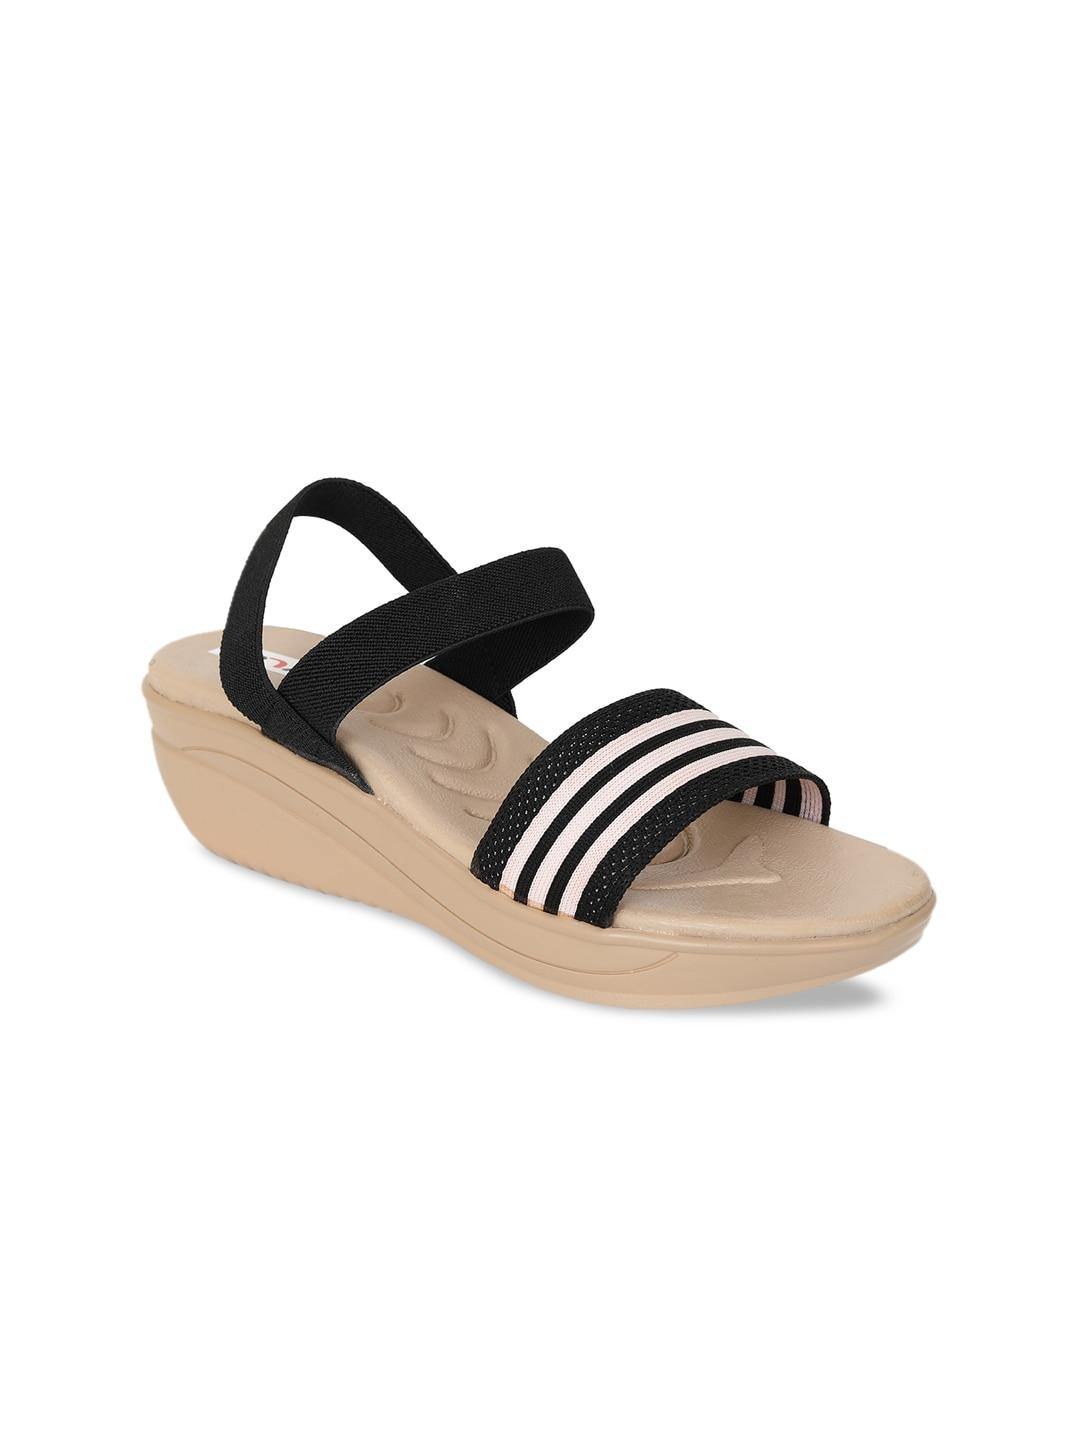 Zyla Black Striped Wedge Sandals